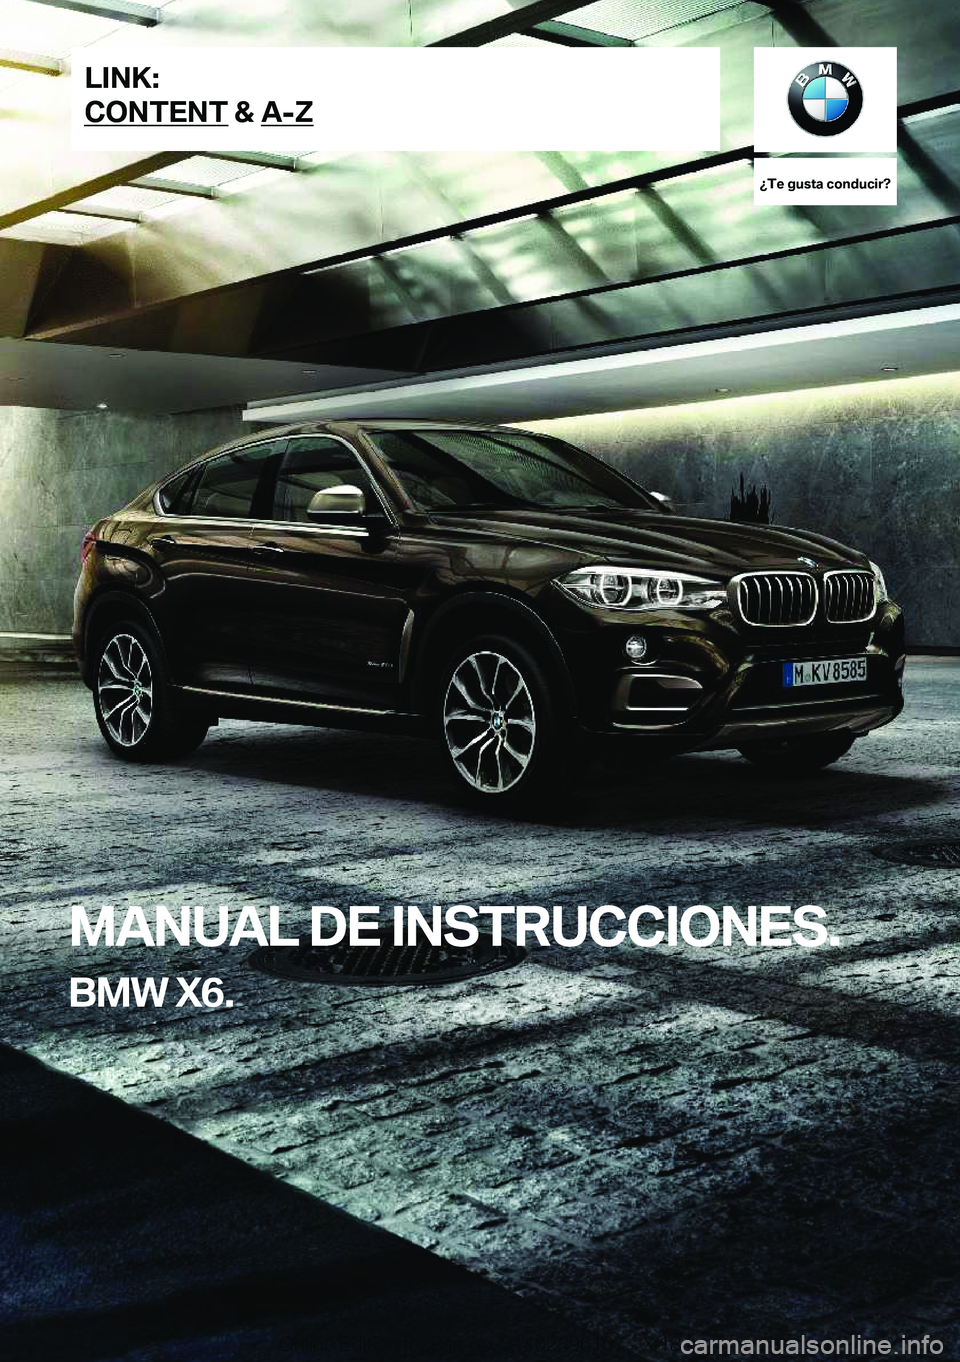 BMW X6 2019  Manuales de Empleo (in Spanish) ��T�e��g�u�s�t�a��c�o�n�d�u�c�i�r� 
�M�A�N�U�A�L��D�E��I�N�S�T�R�U�C�C�I�O�N�E�S�.
�B�M�W��X�6�.�L�I�N�K�:
�C�O�N�T�E�N�T��&��A�-�Z�O�n�l�i�n�e��E�d�i�t�i�o�n��f�o�r��P�a�r�t��n�o�.��0�1�